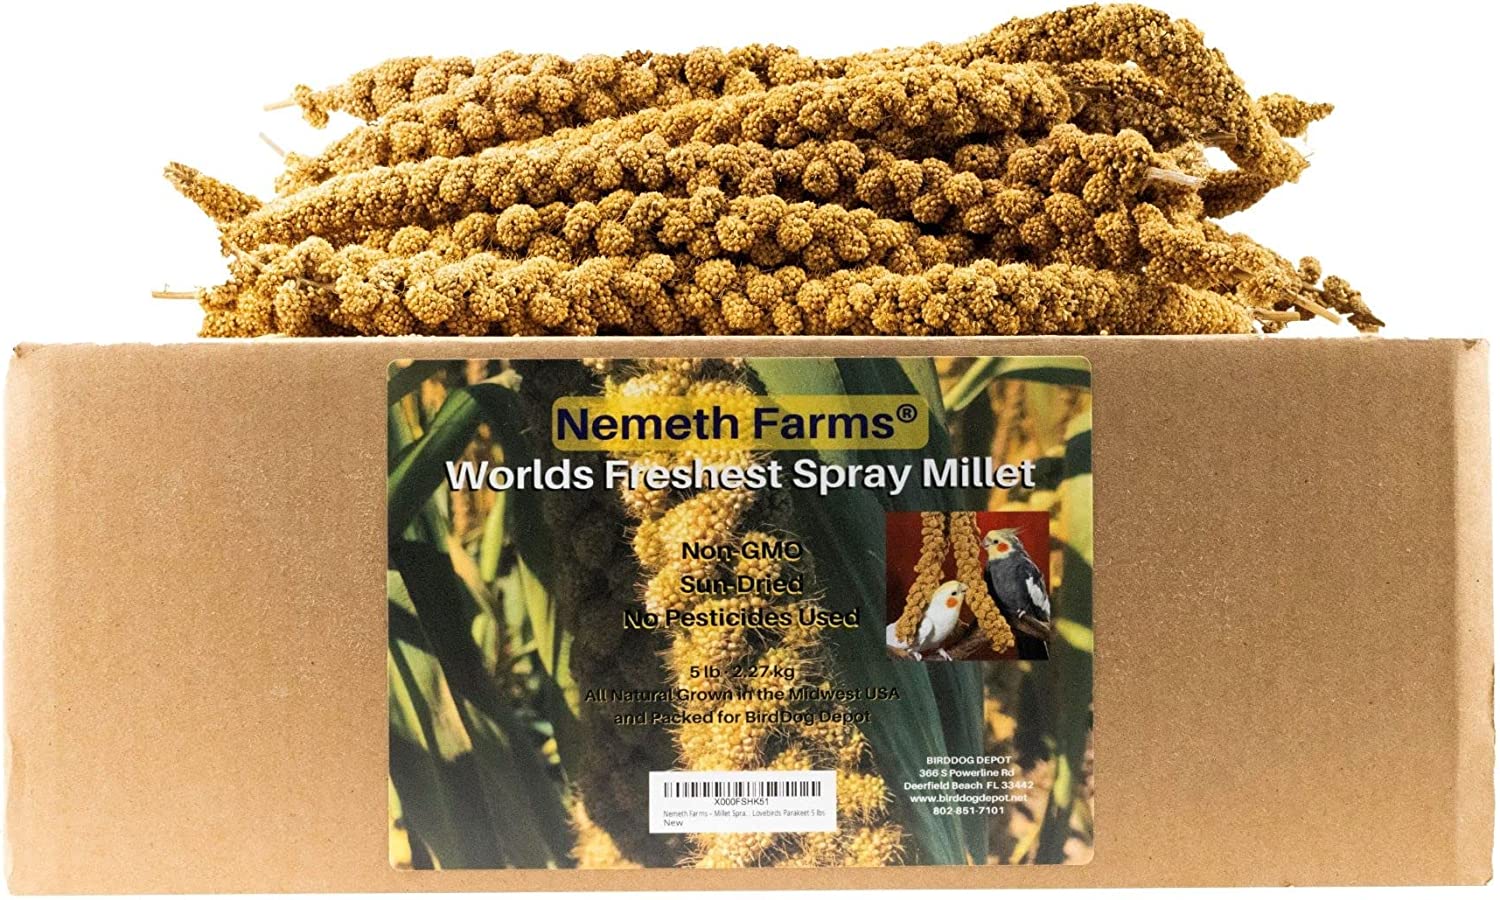 Big fresh Spray Millet by Nemeth Farms shown in 5 pound box